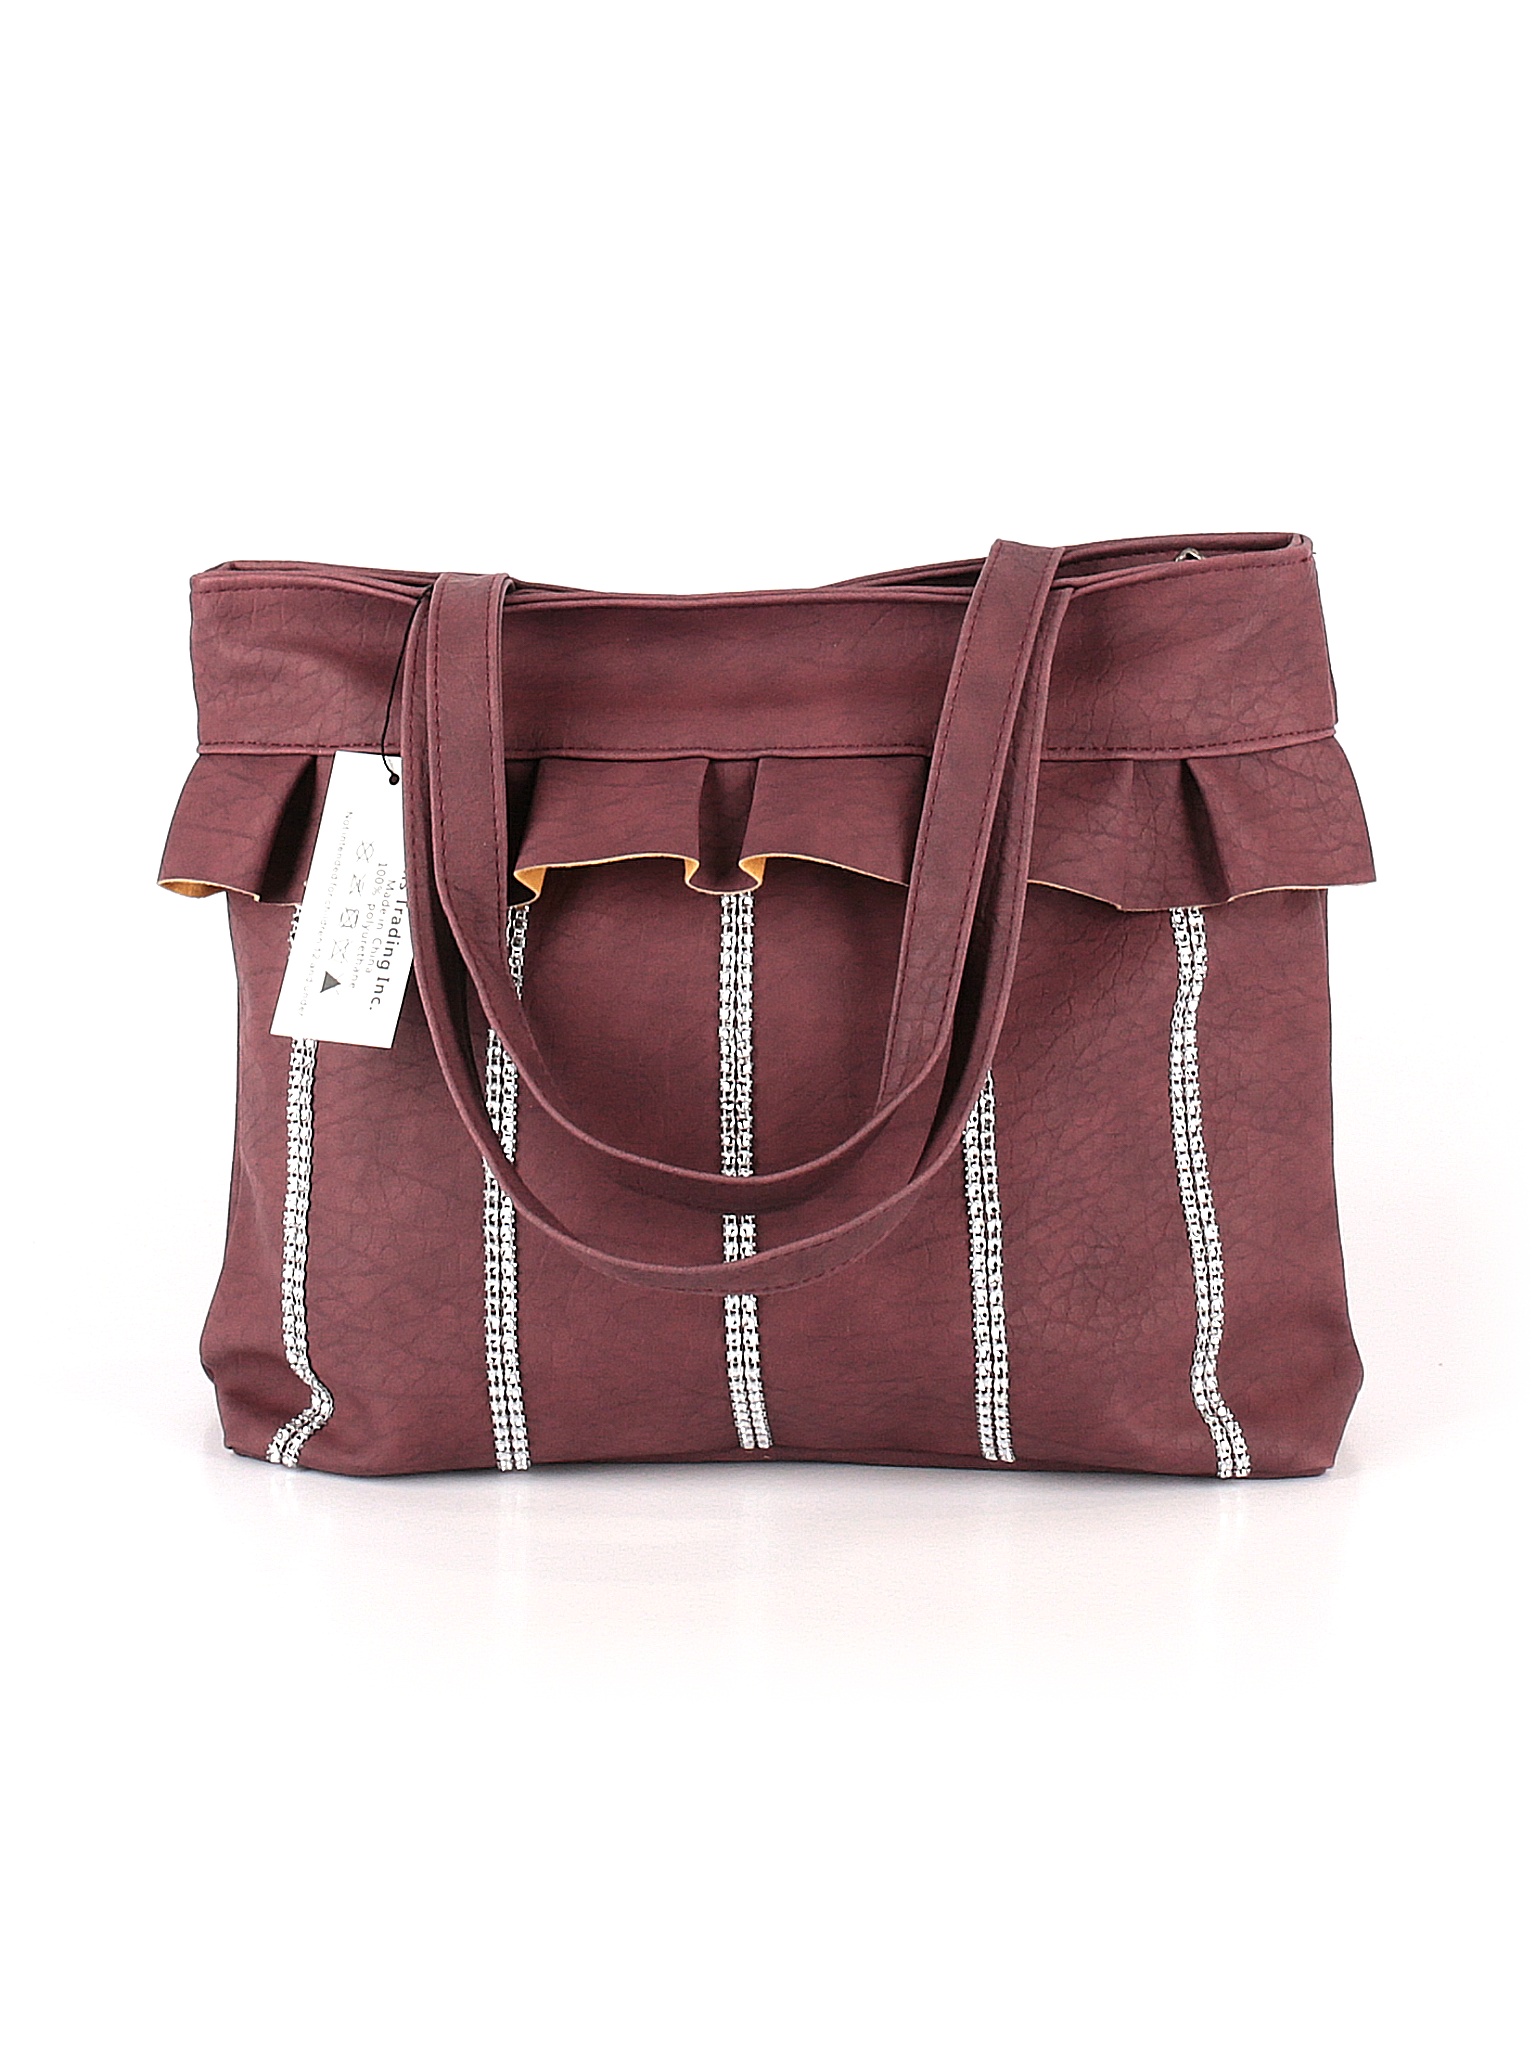 15" 9" and Large,Polyurethane CHUNS  Fashion Handbags  10" Shoulder Bag 3" 